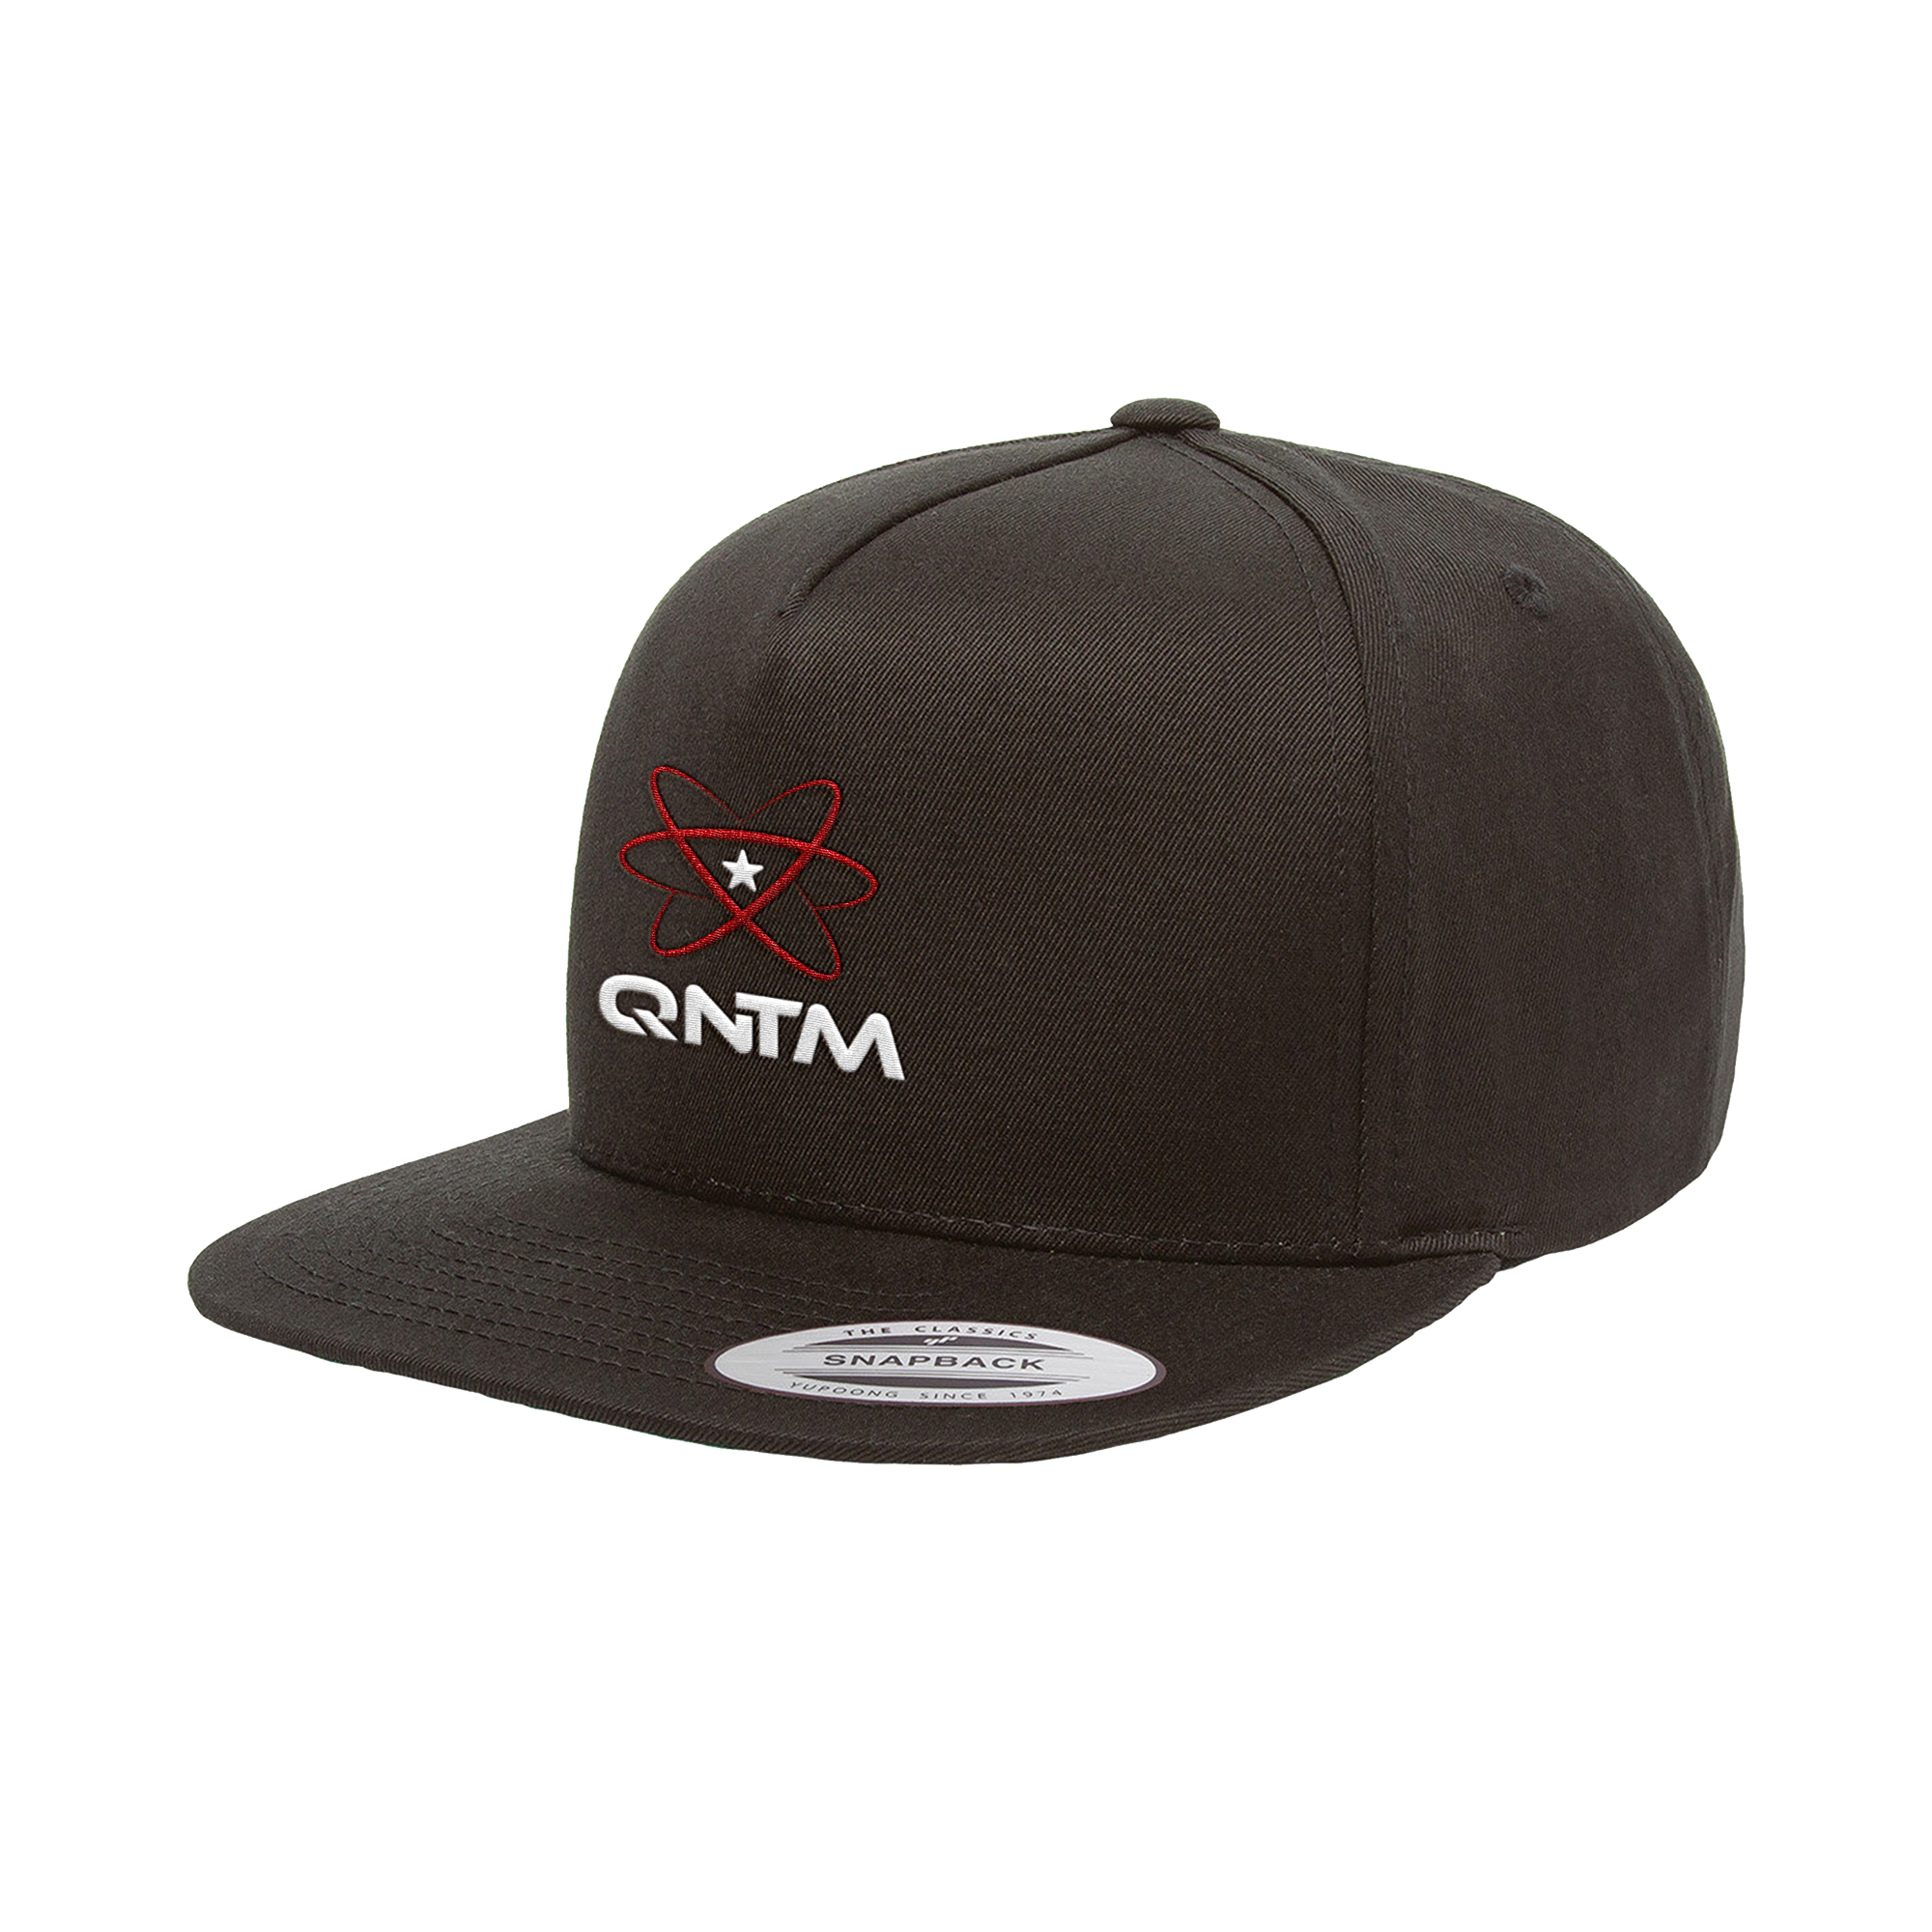 QNTM Emblem Snapback